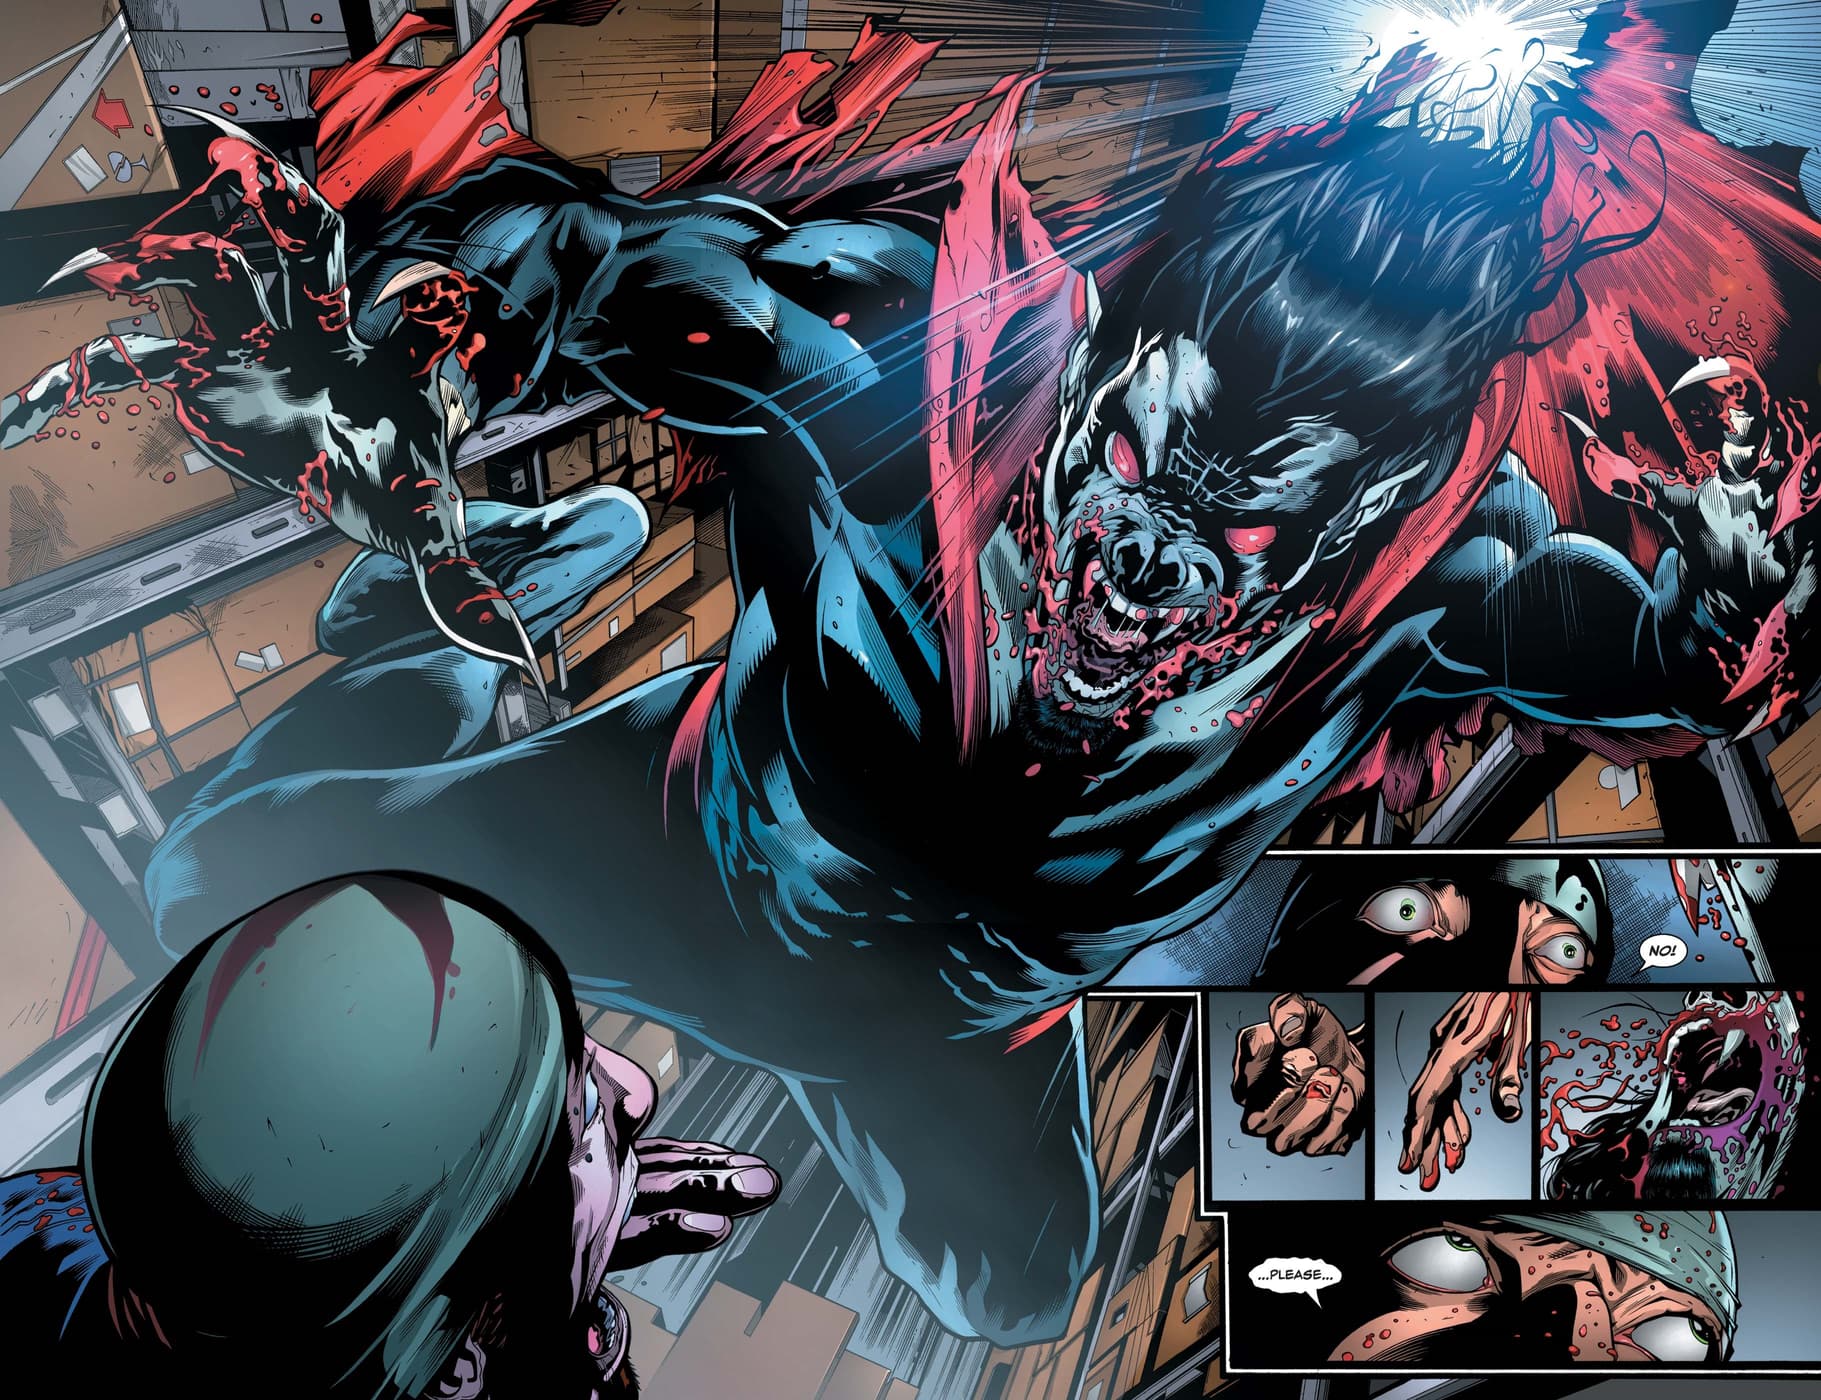 Morbius Vampire 1 2 3 ONE OF EACH 3 Comics Total Marvel 2013 Read Description